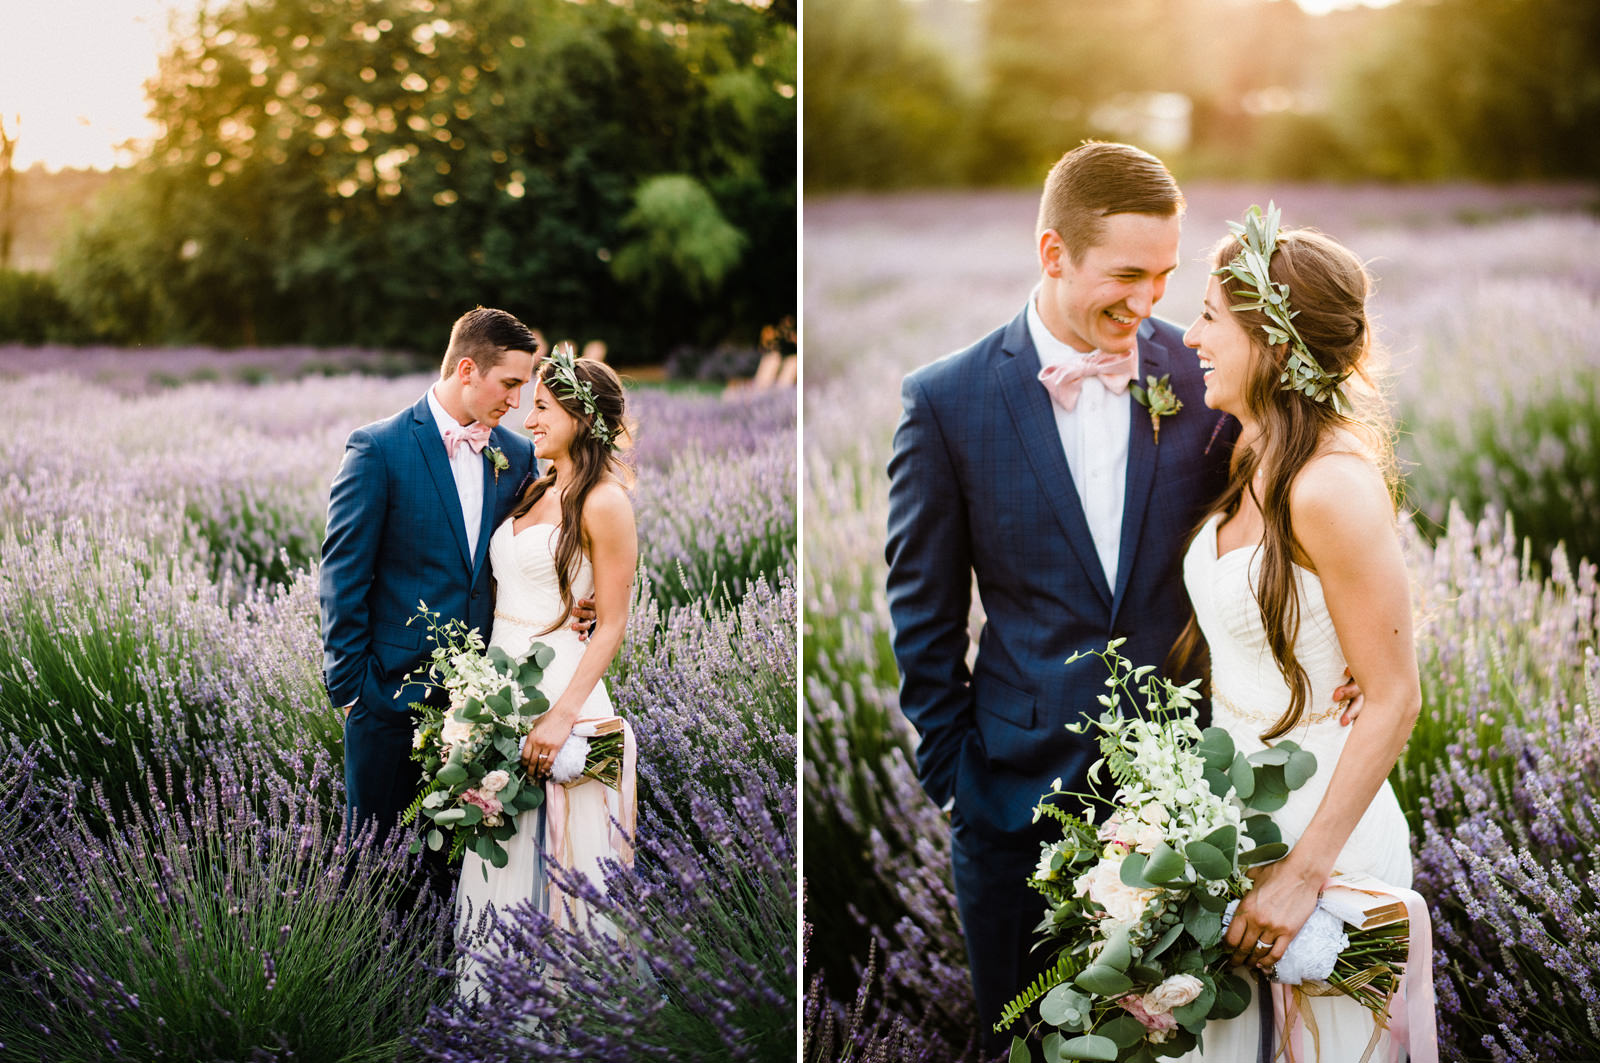 094-woodinville-lavendar-farm-wedding-with-golden-glowy-photos.jpg